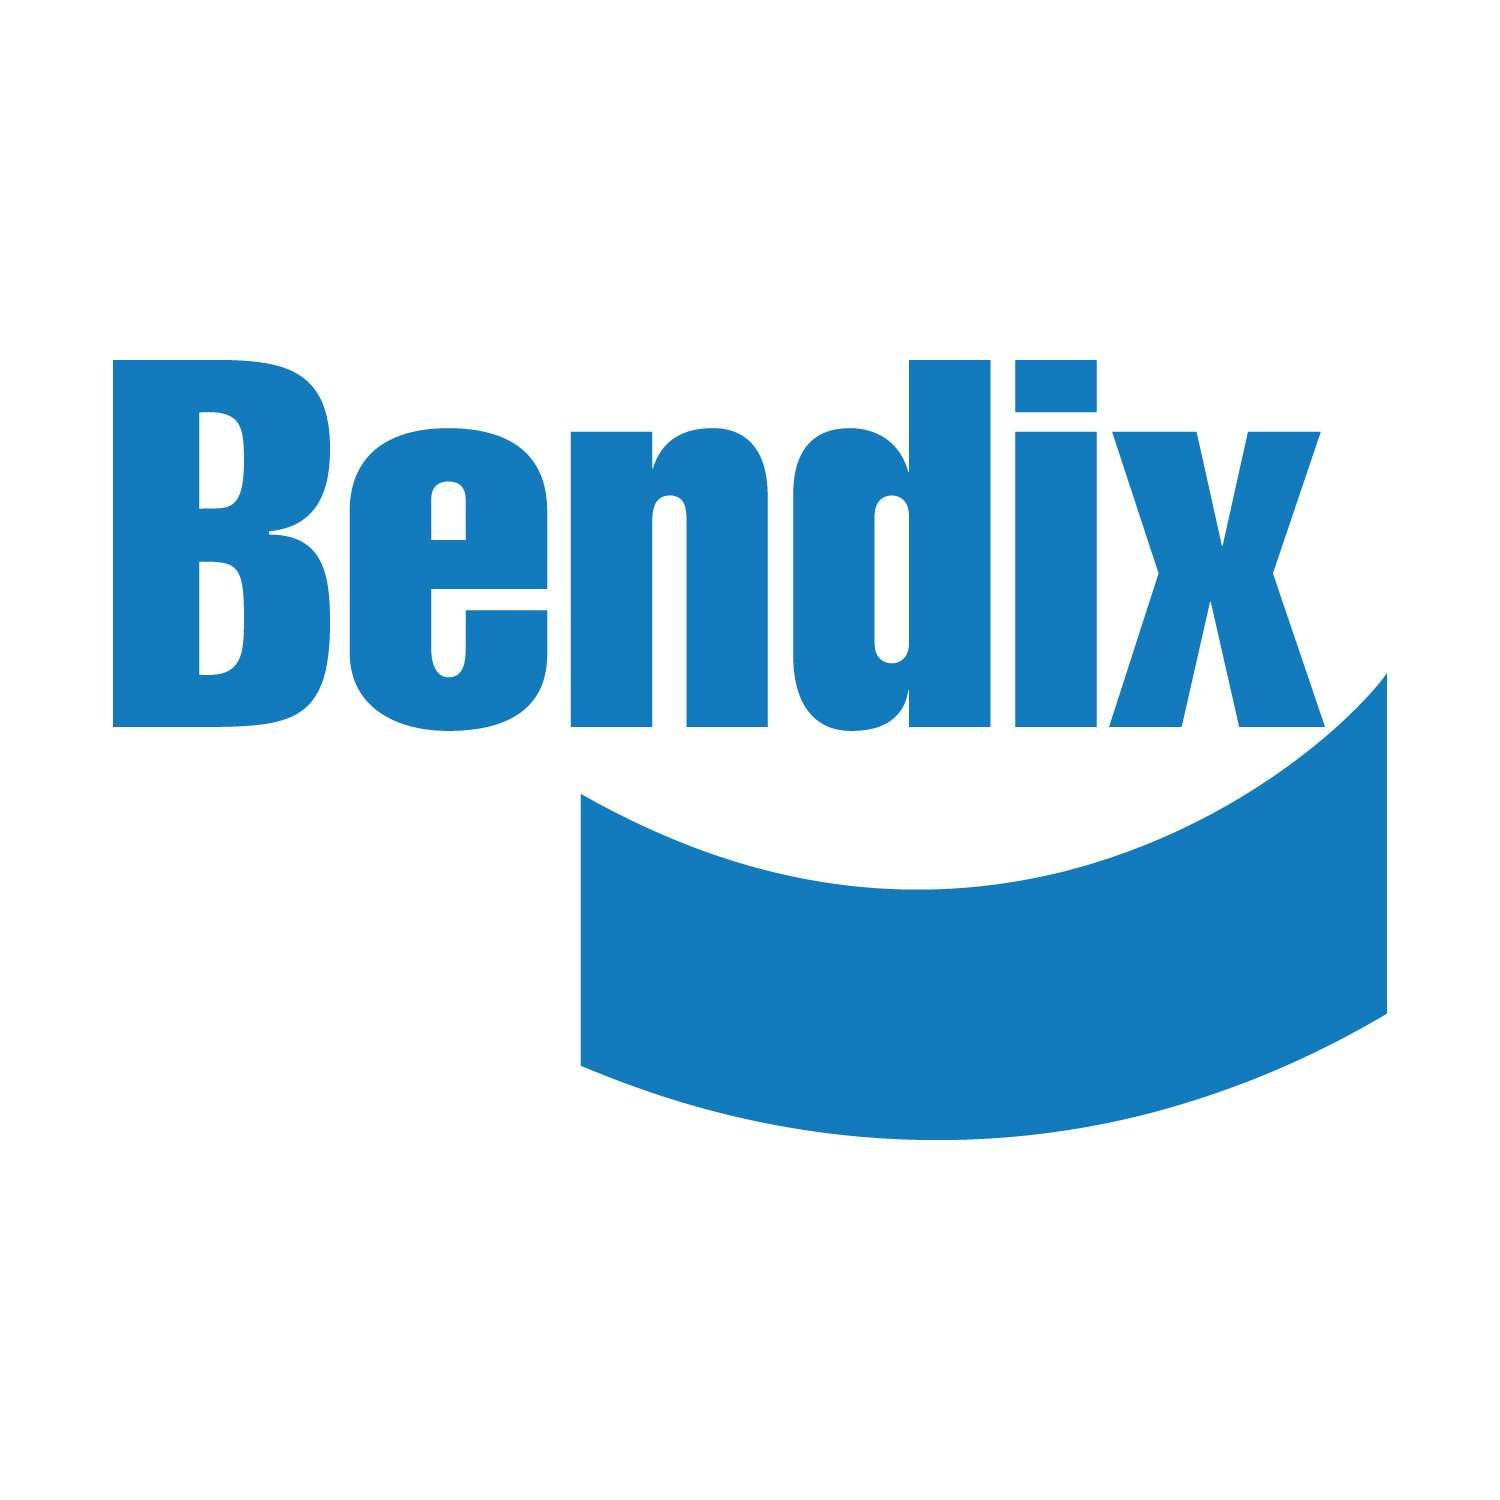 logo Bendix